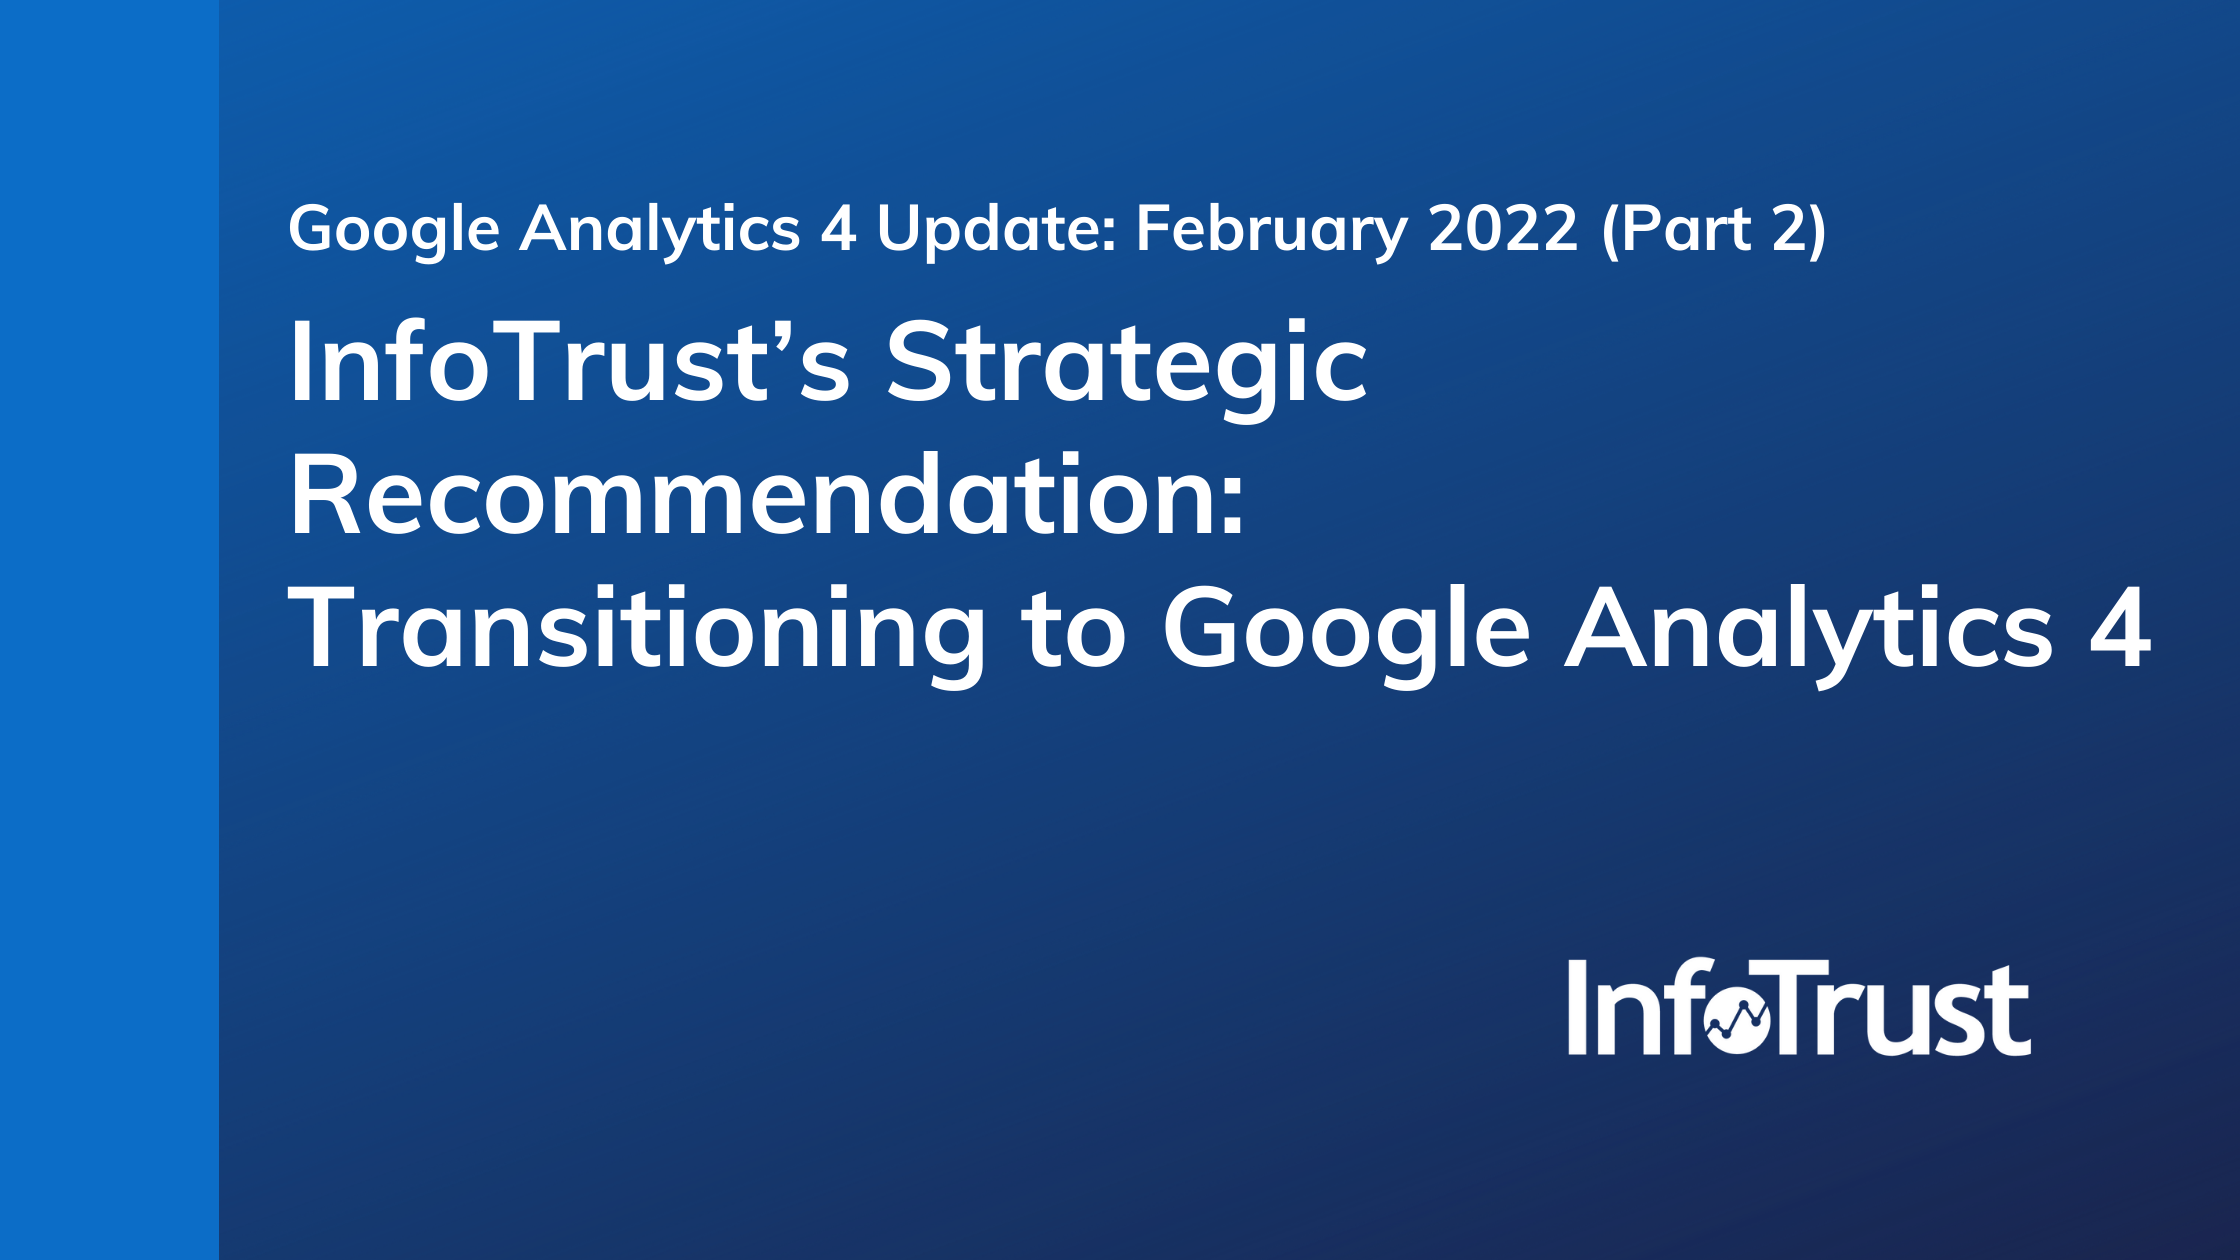 InfoTrust’s Strategic Recommendation: Transitioning to Google Analytics 4